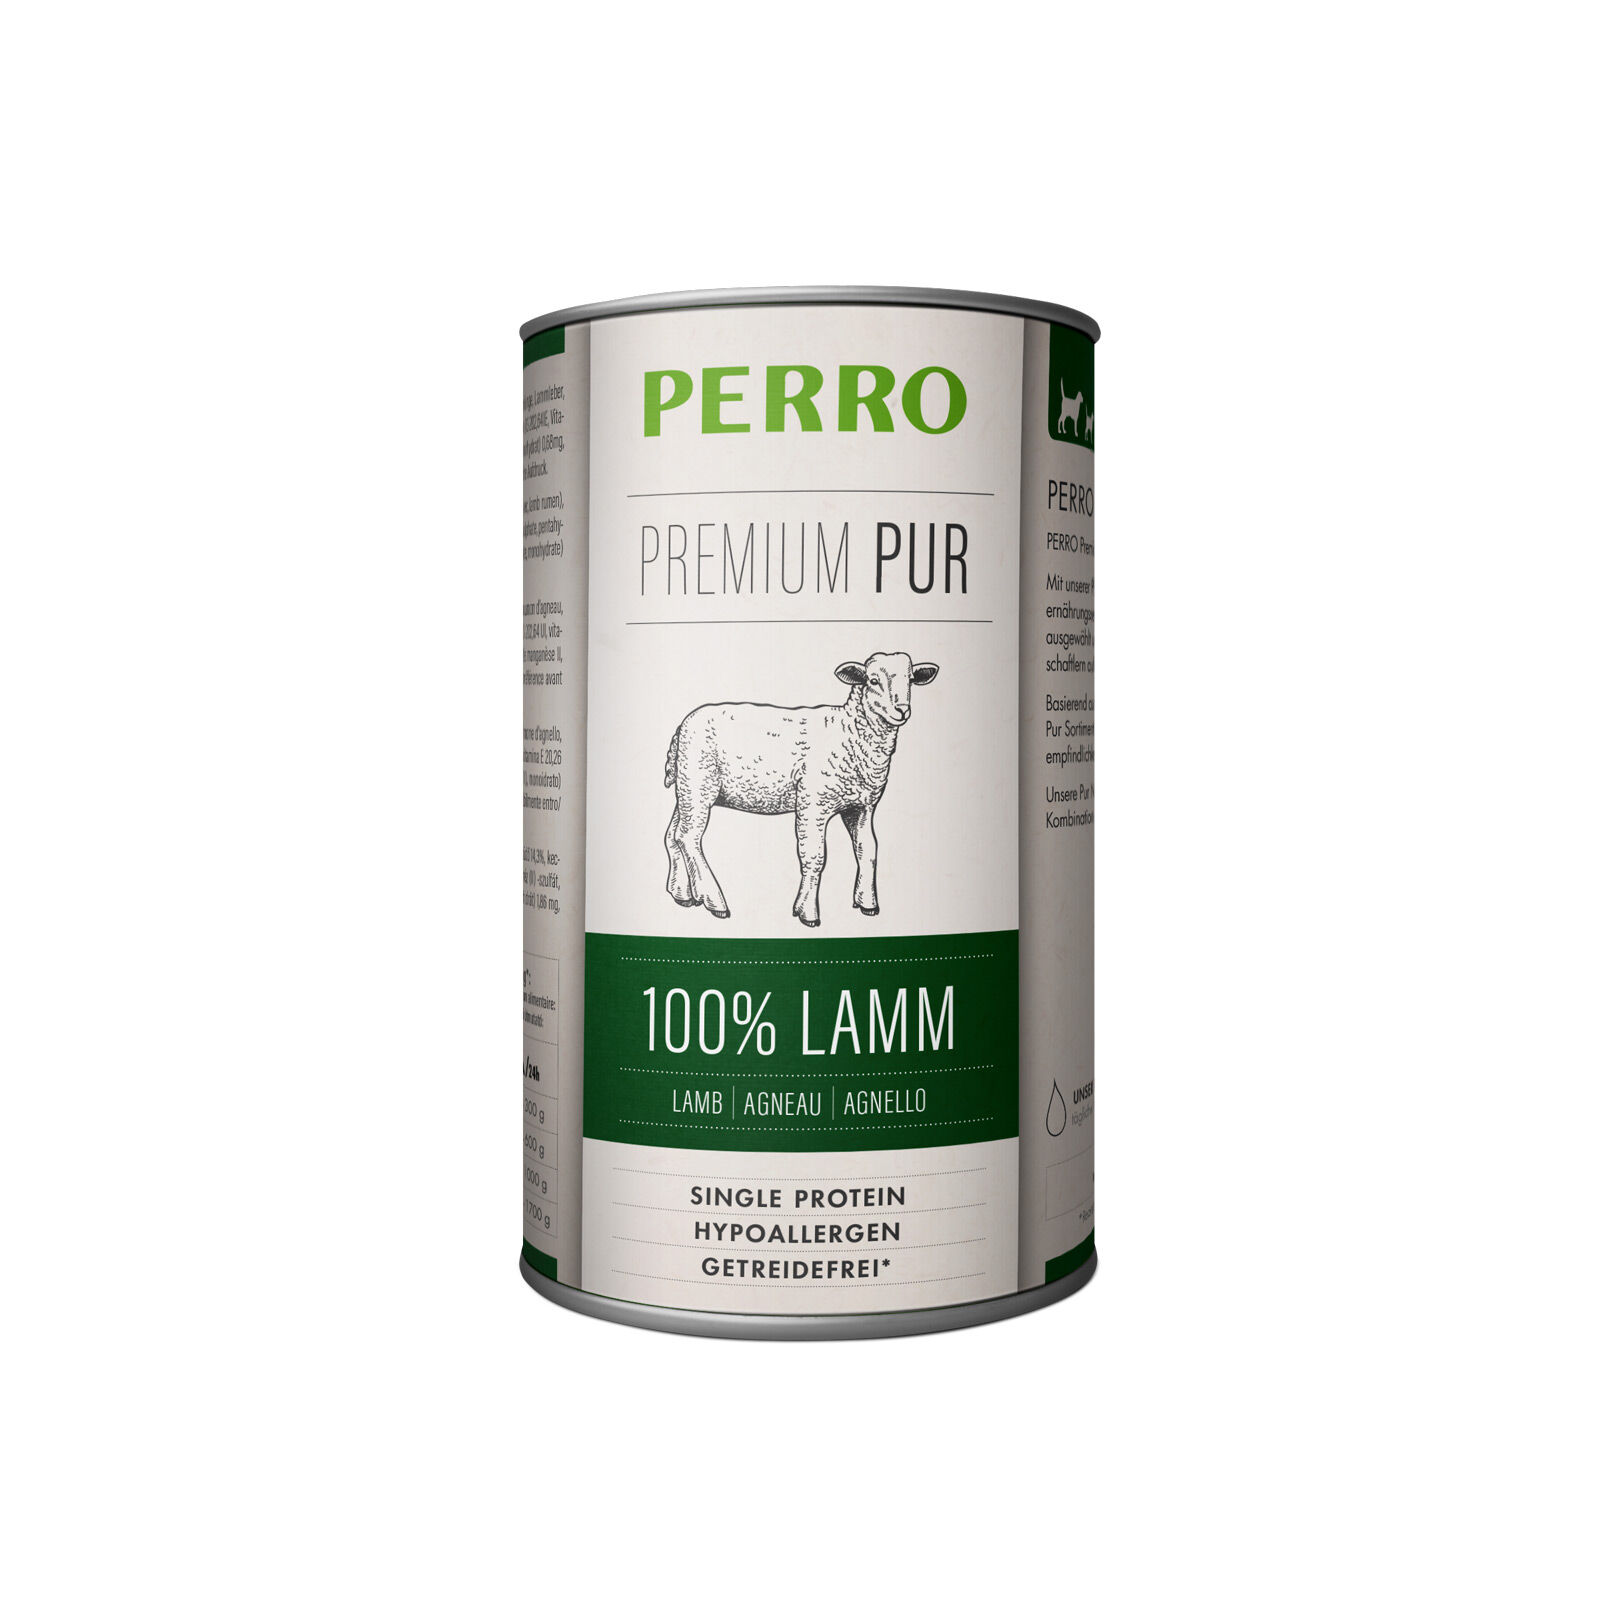 181206-410g-PremiumPur-Lamm